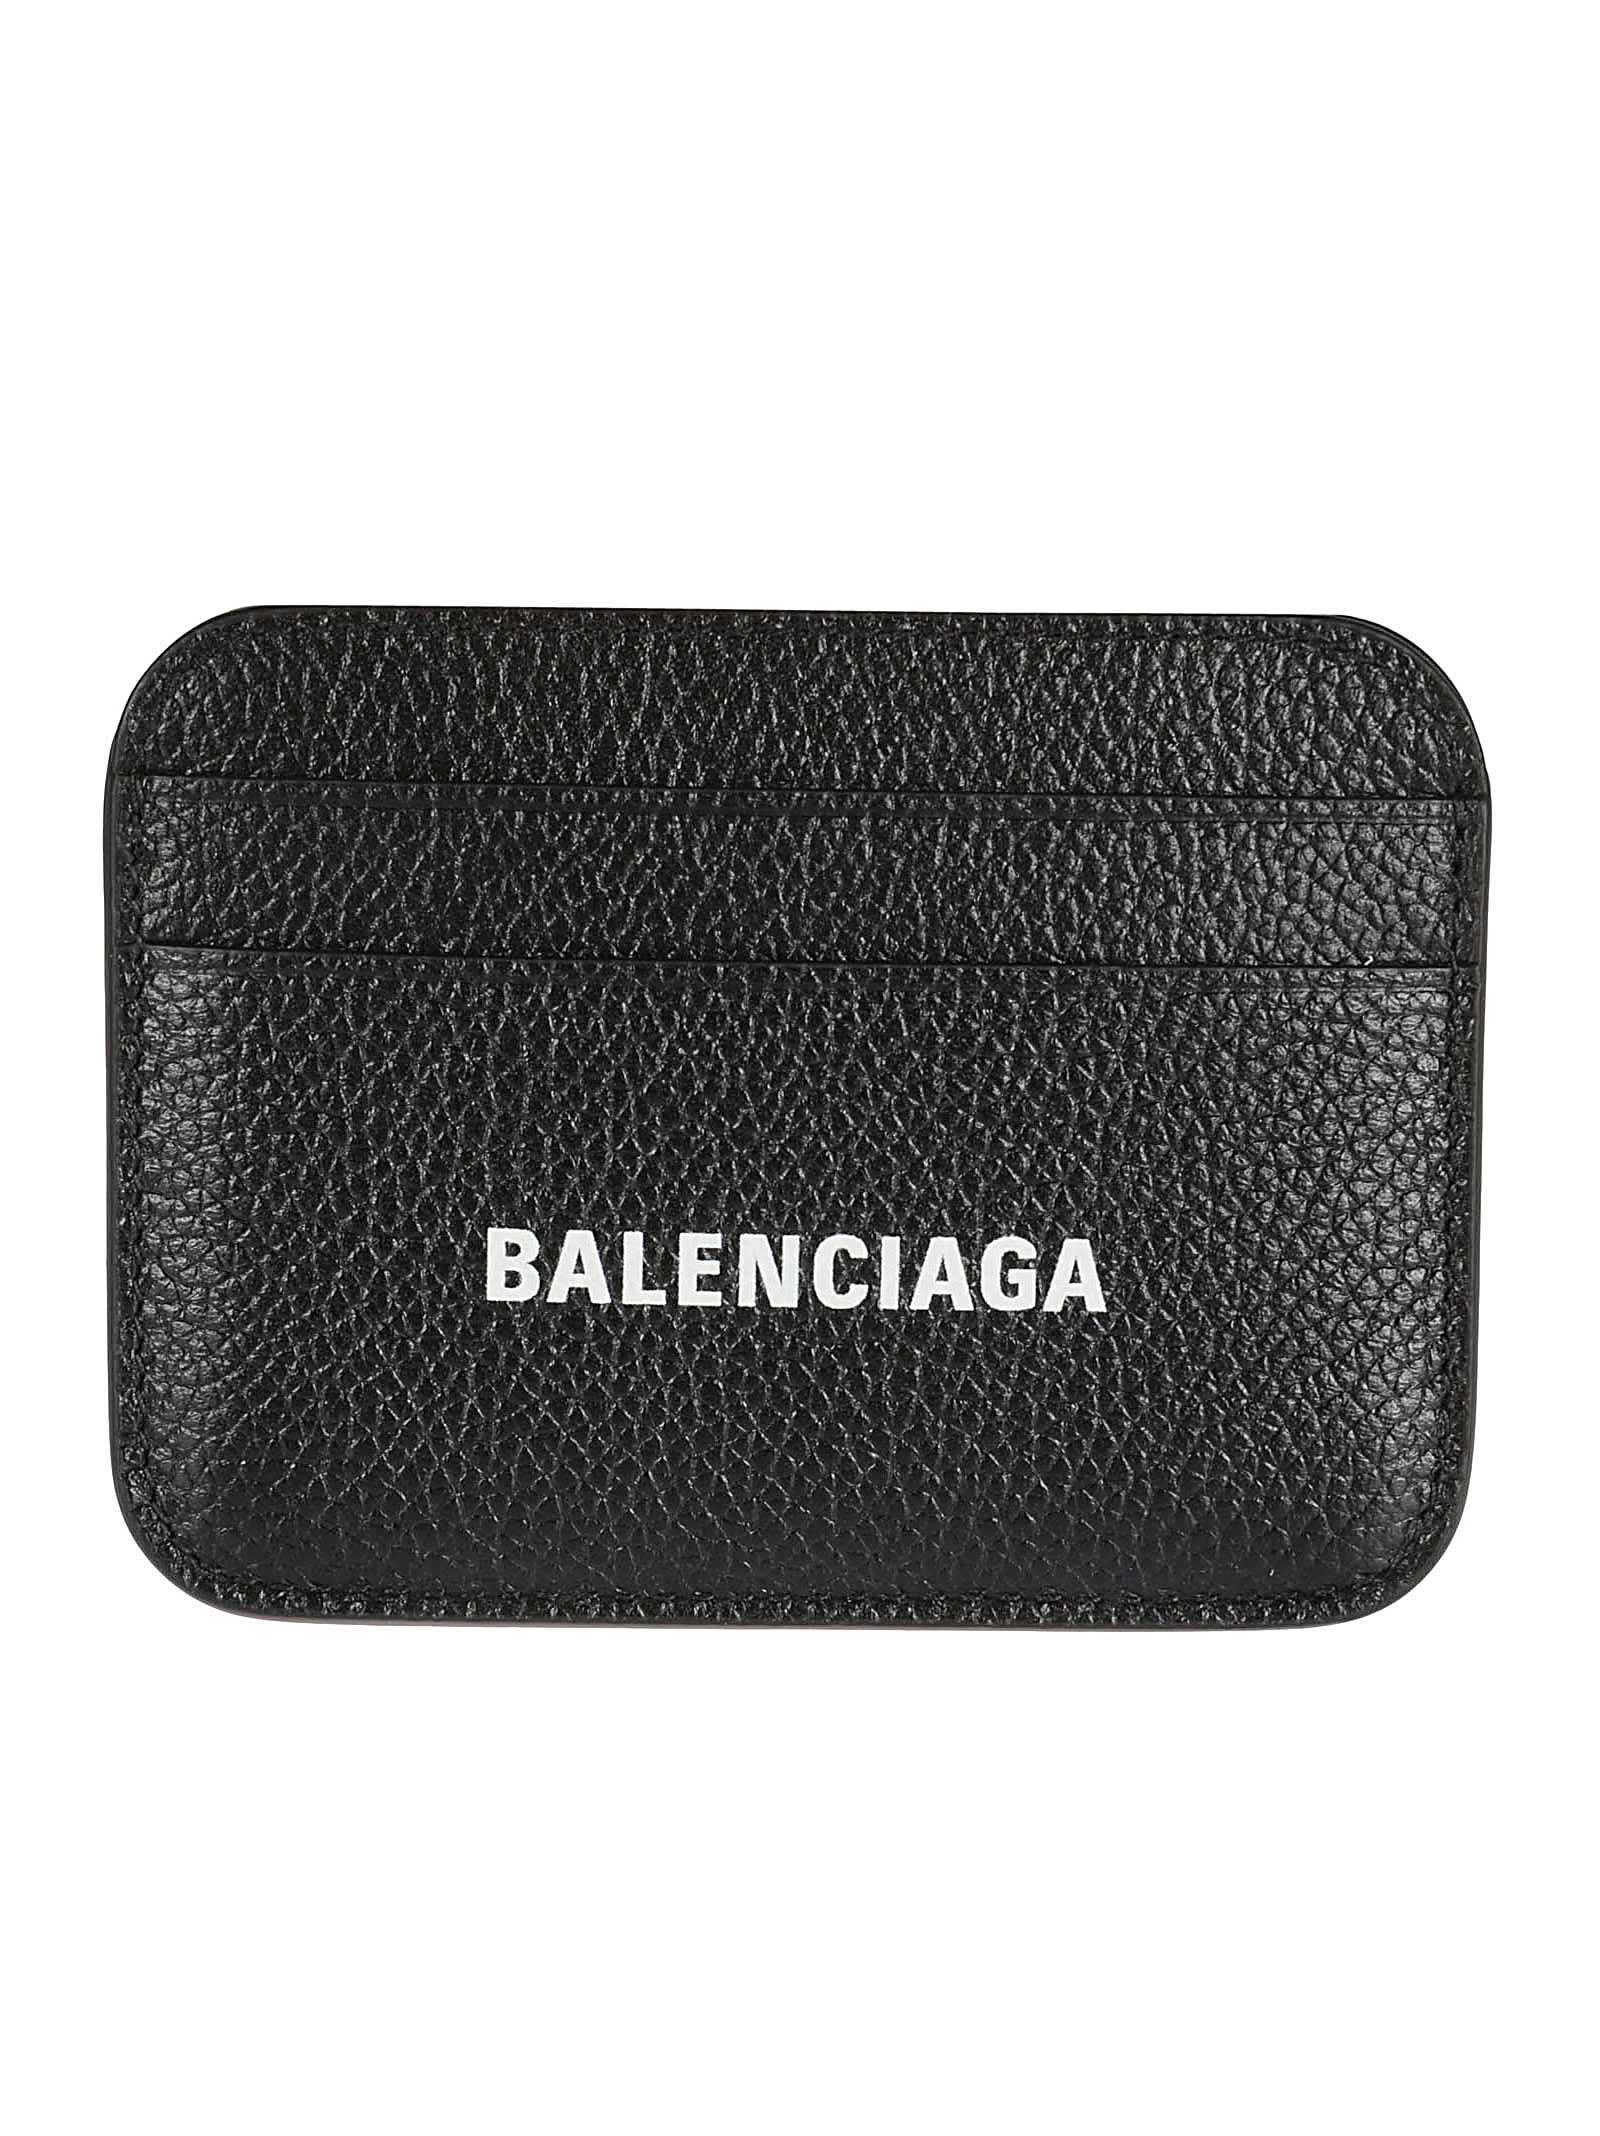 Balenciaga Grained Leather Logo Card Holder In Black/white